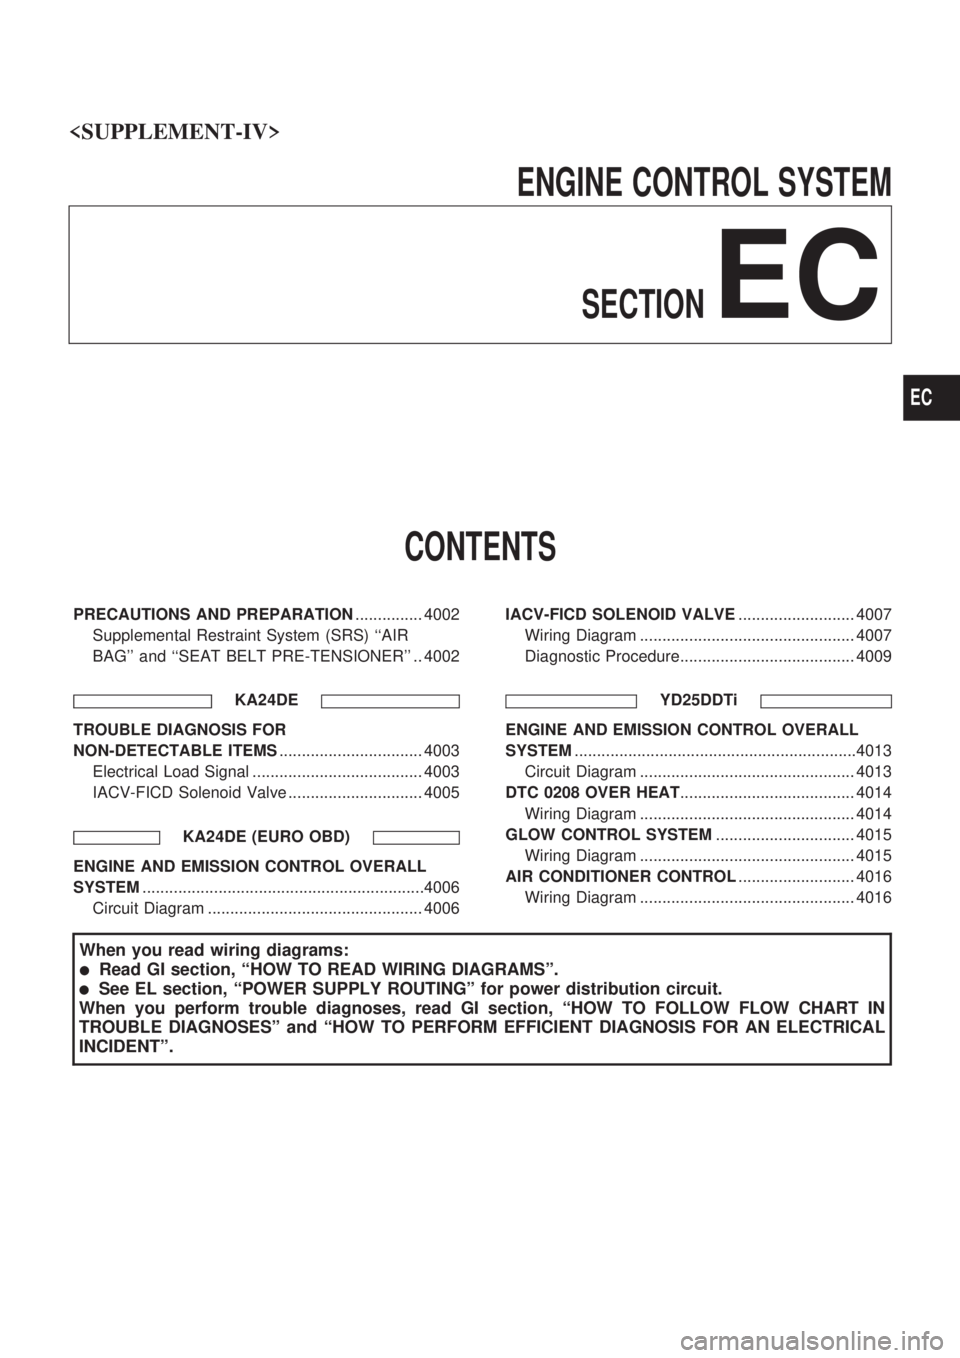 NISSAN PICK-UP 2003  Repair Manual ENGINE CONTROL SYSTEM
SECTION
EC
CONTENTS
PRECAUTIONS AND PREPARATION............... 4002
Supplemental Restraint System (SRS) ``AIR
BAG and ``SEAT BELT PRE-TENSIONER .. 4002
KA24DE
TROUBLE DIAGNOS